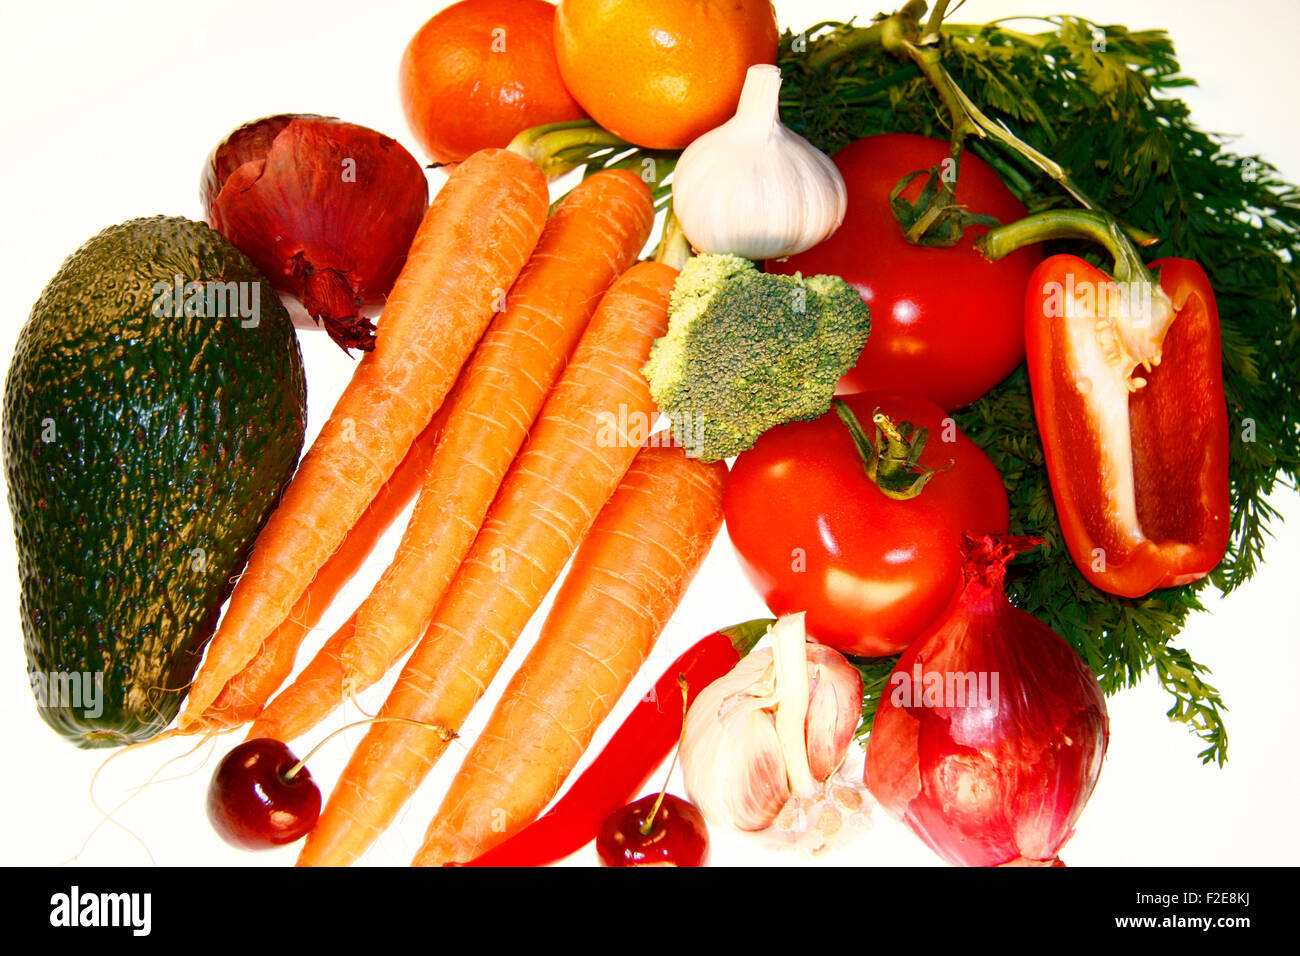 Avocado, Karotten/ Mohrrueben, Brokkoli, Apfel, pomodori, Knoblauch, Paprika-Schote, Zwiebel - Symbolbild Nahrungsmittel. Foto Stock